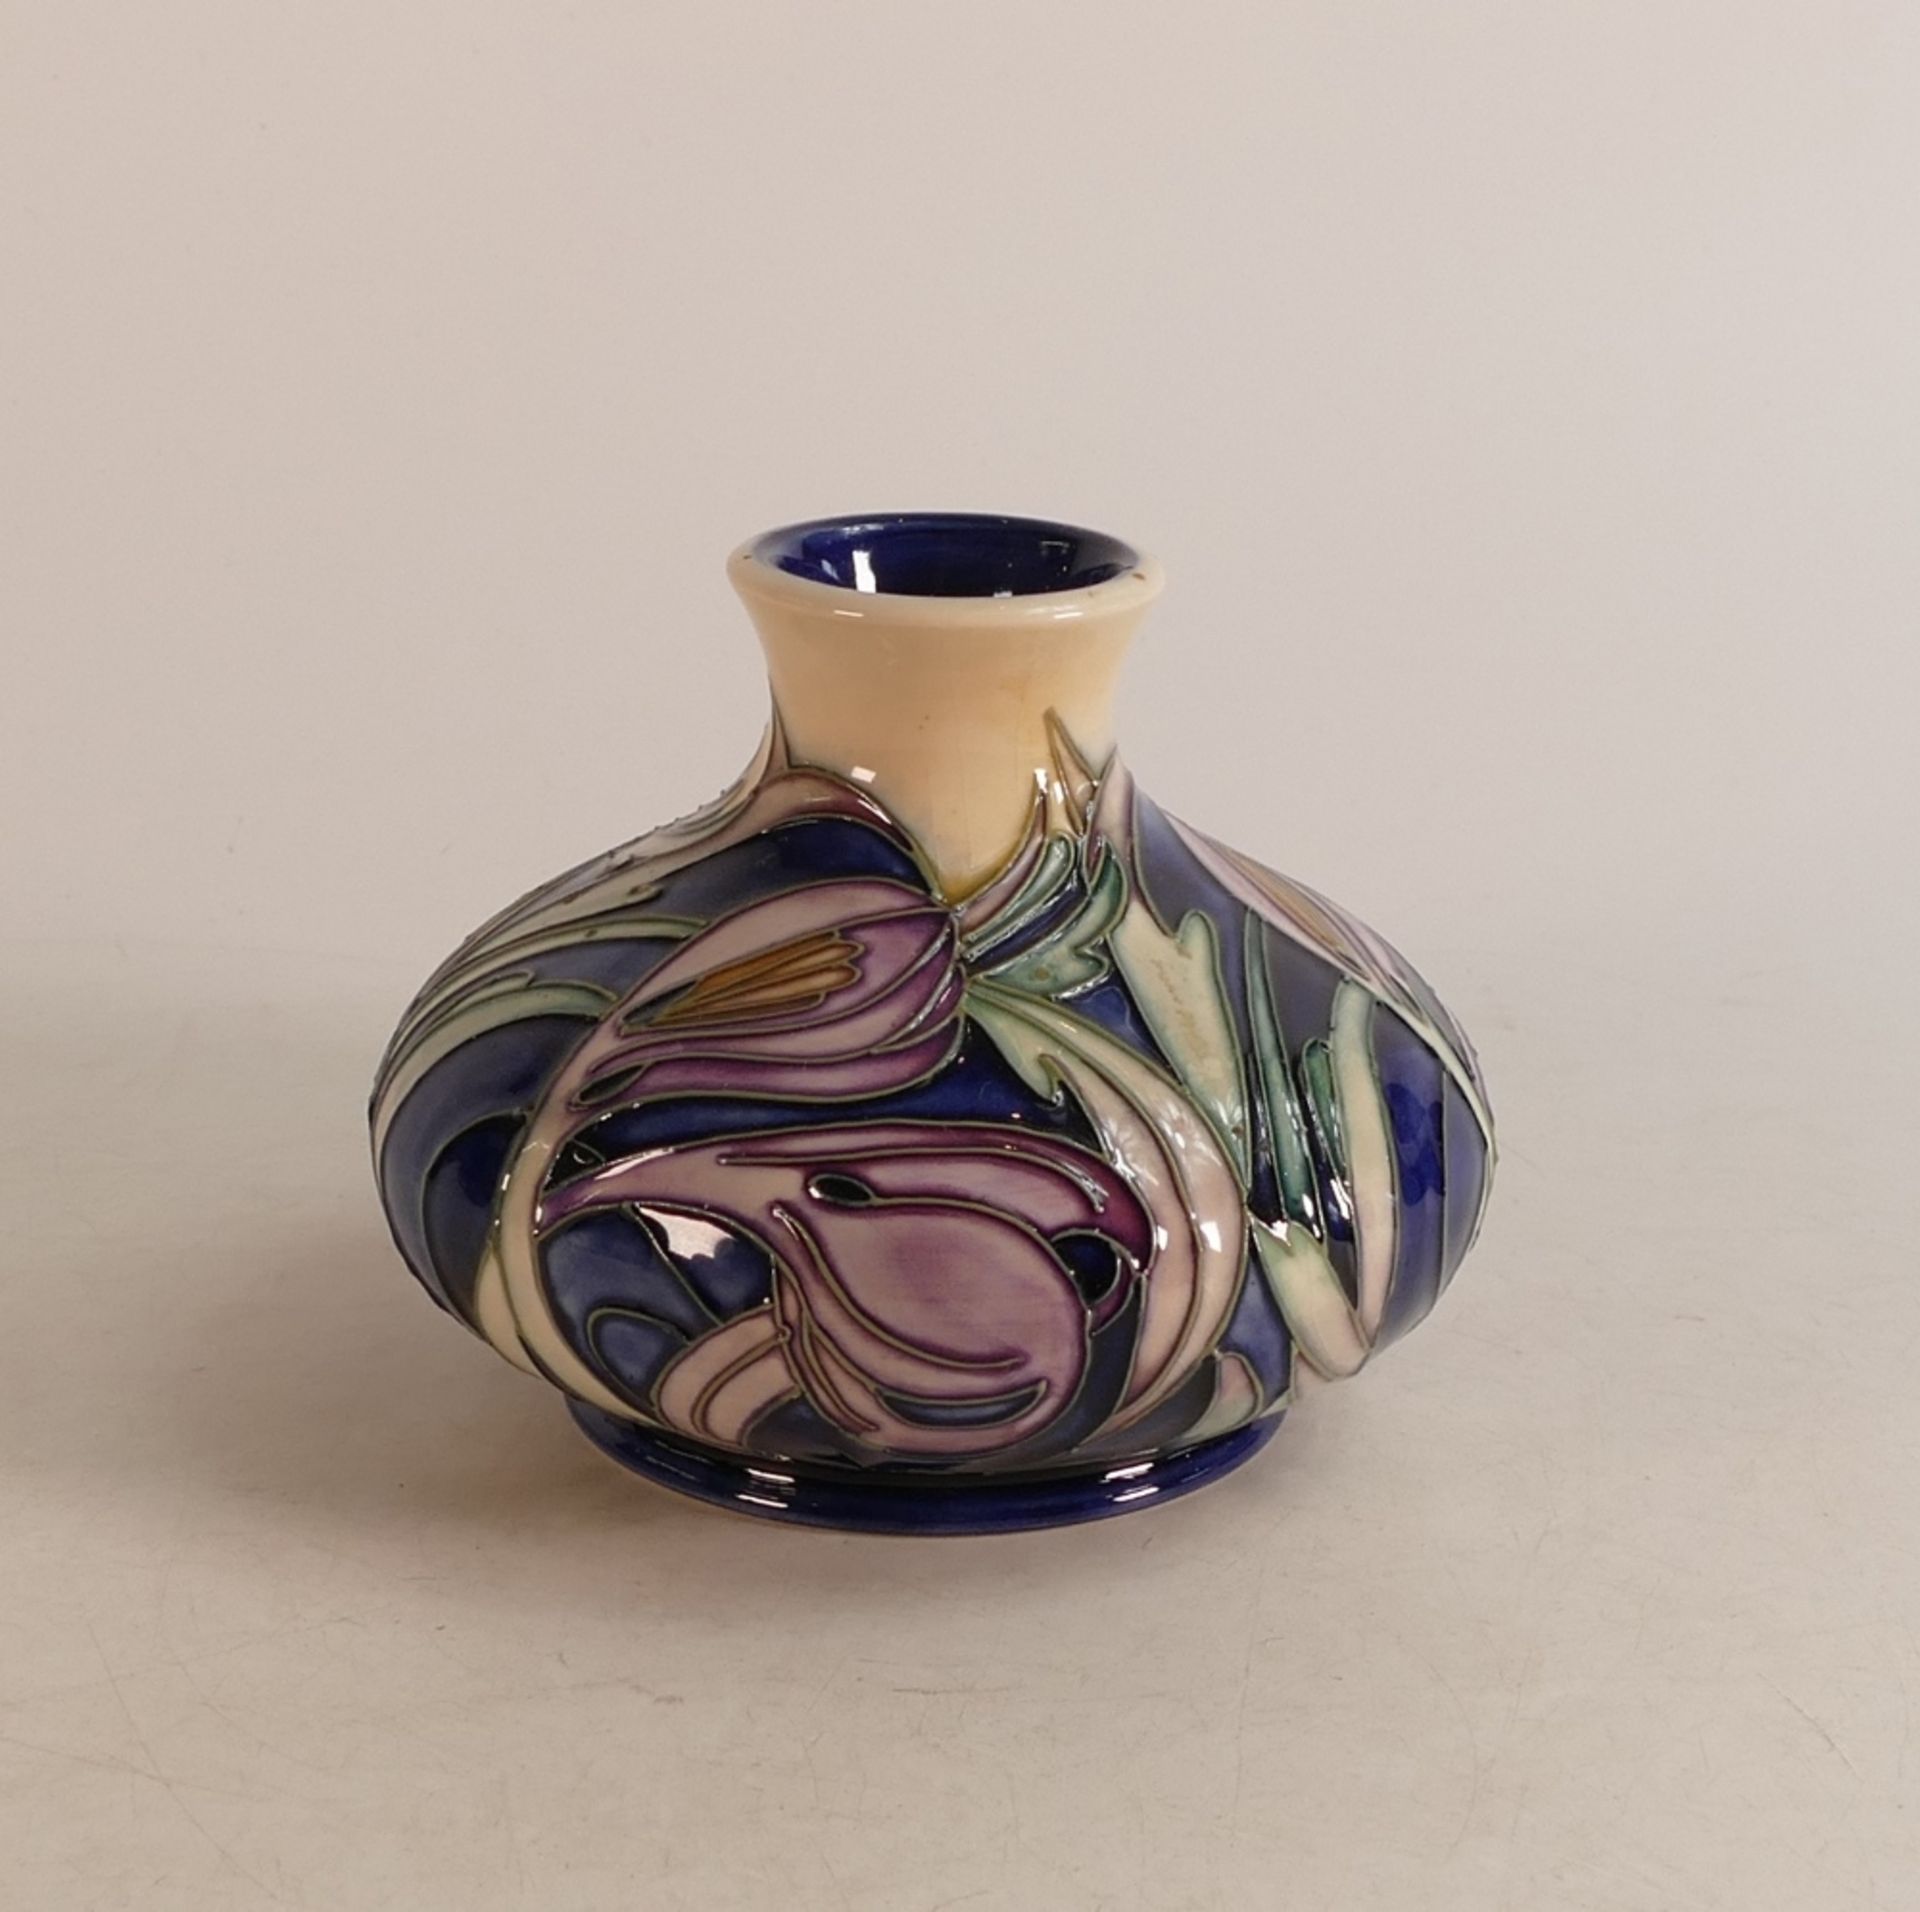 Moorcroft Saffron Crocus bud vase, signed Emma Bossons, 77/150, dated 2003, slight crazing,